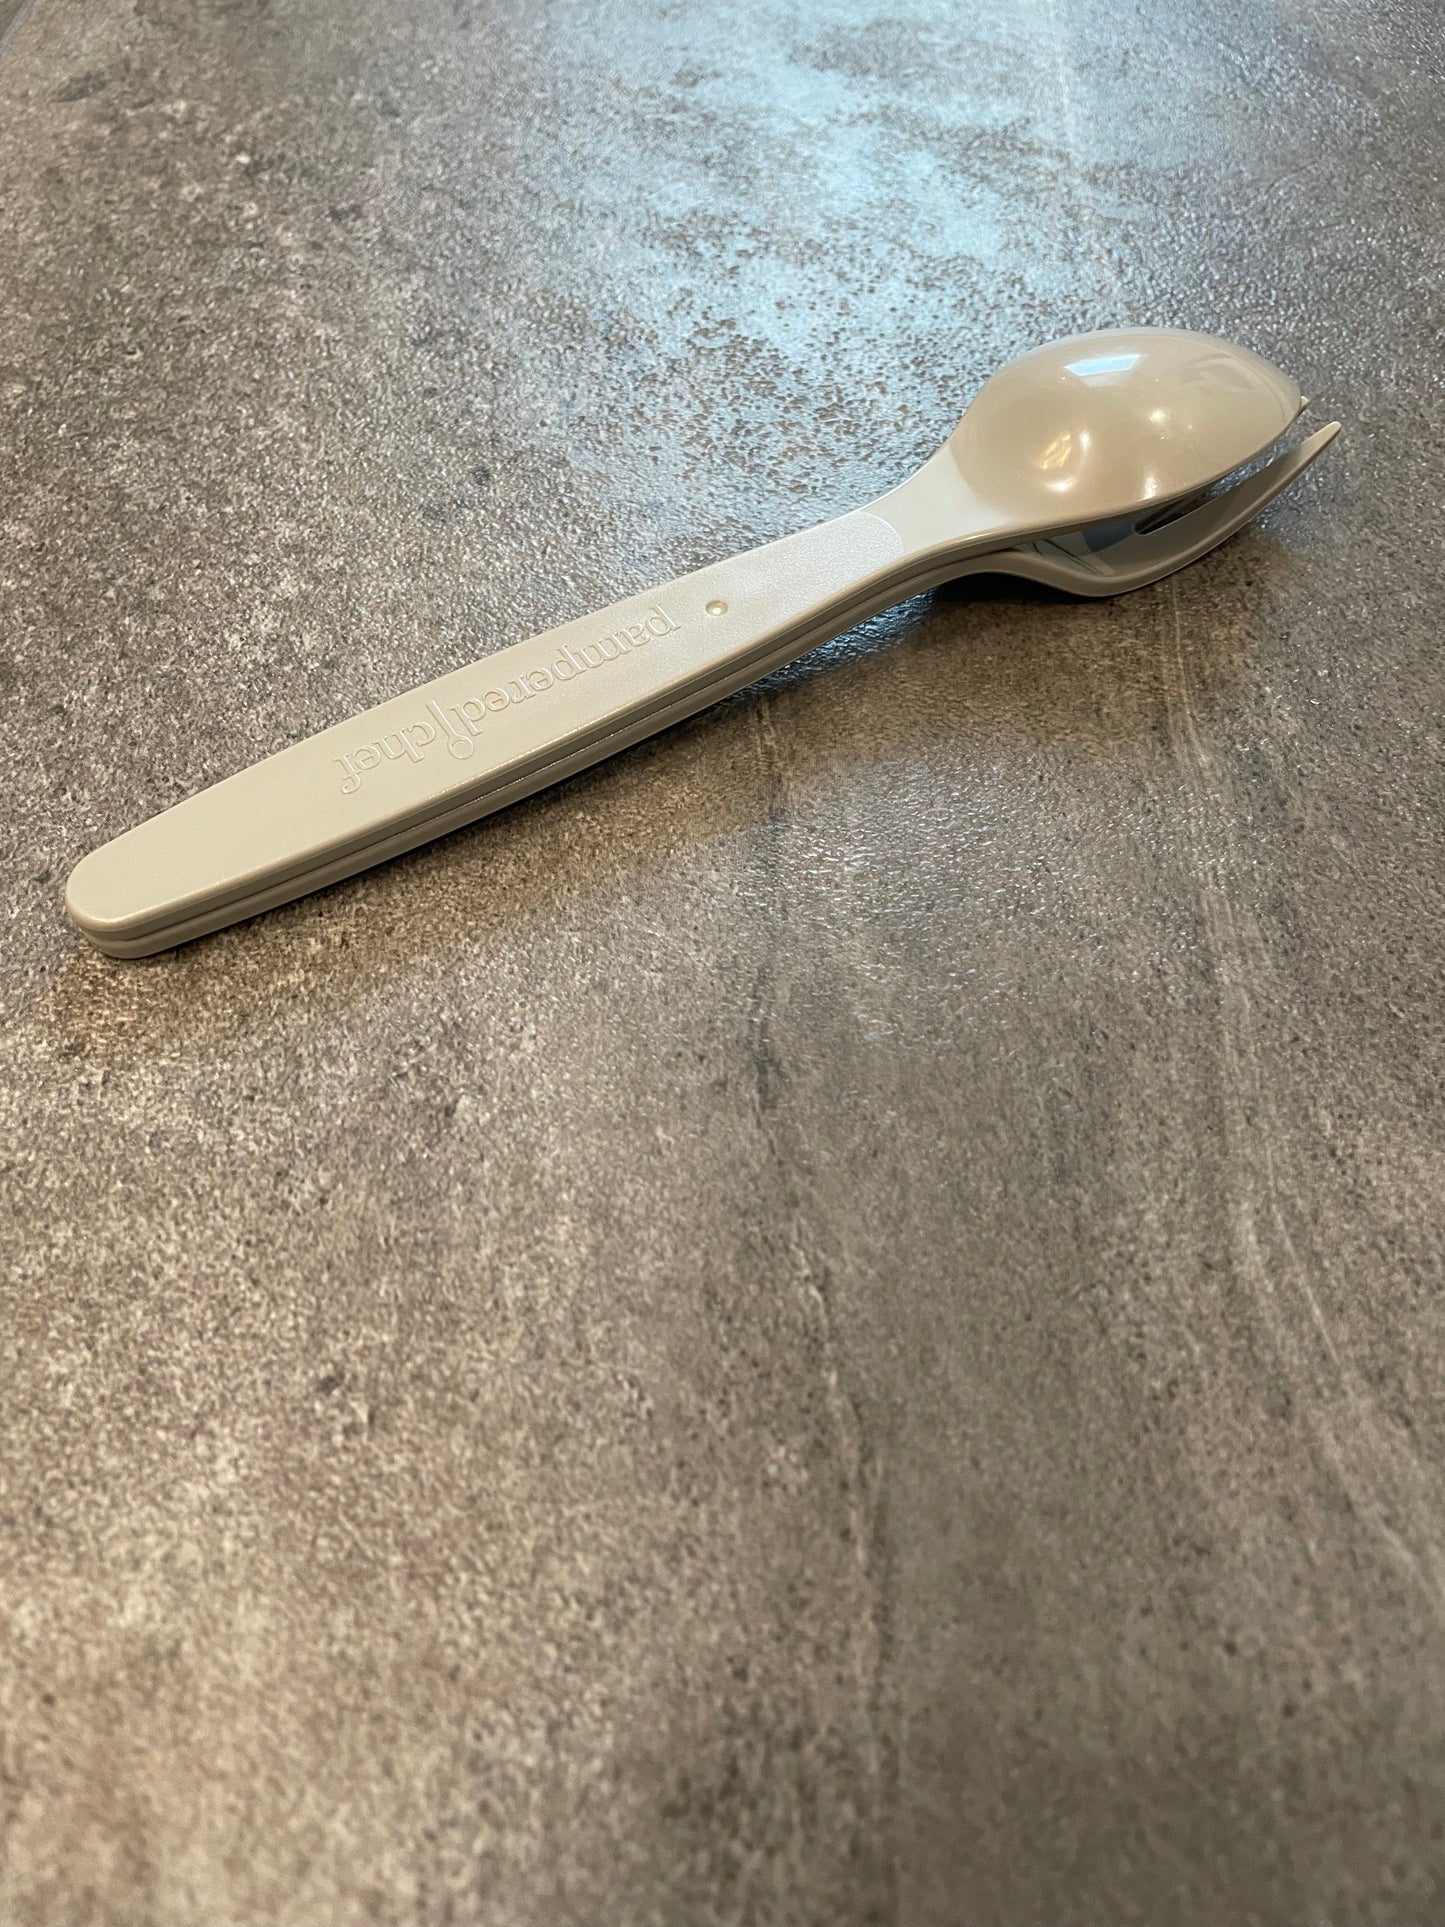 Pampered Chef "Make & Take" Spoon & Fork